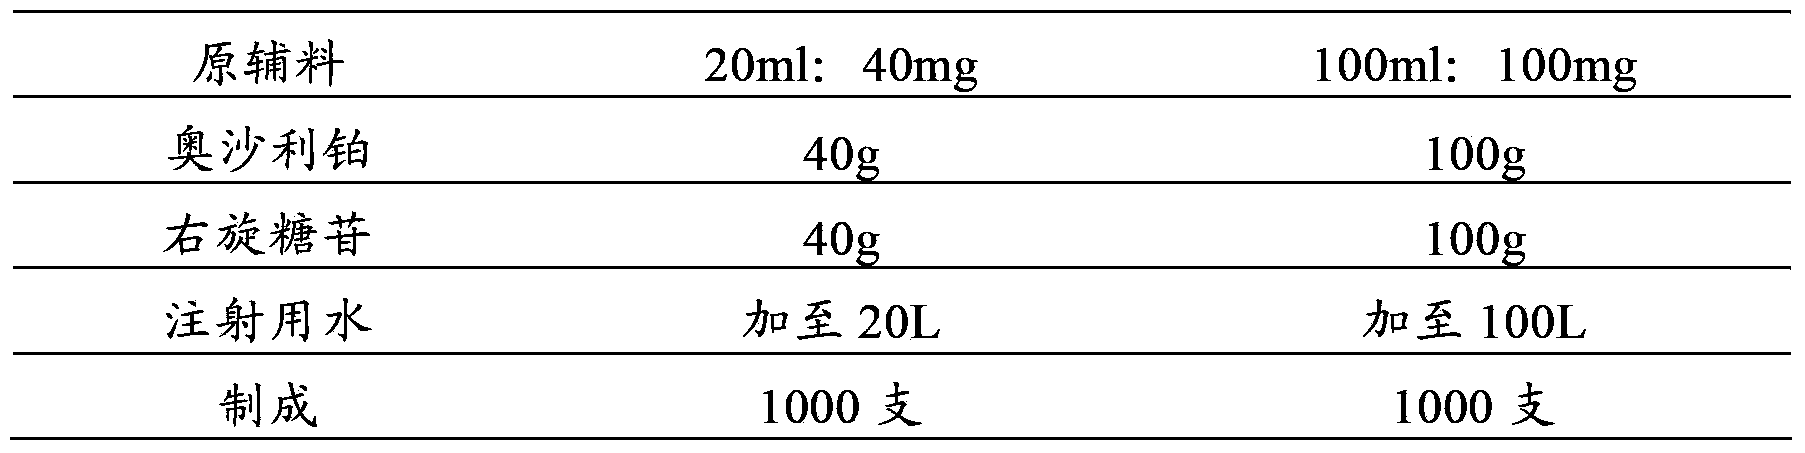 Pharmaceutical composition containing oxaliplatin and fluorouracil